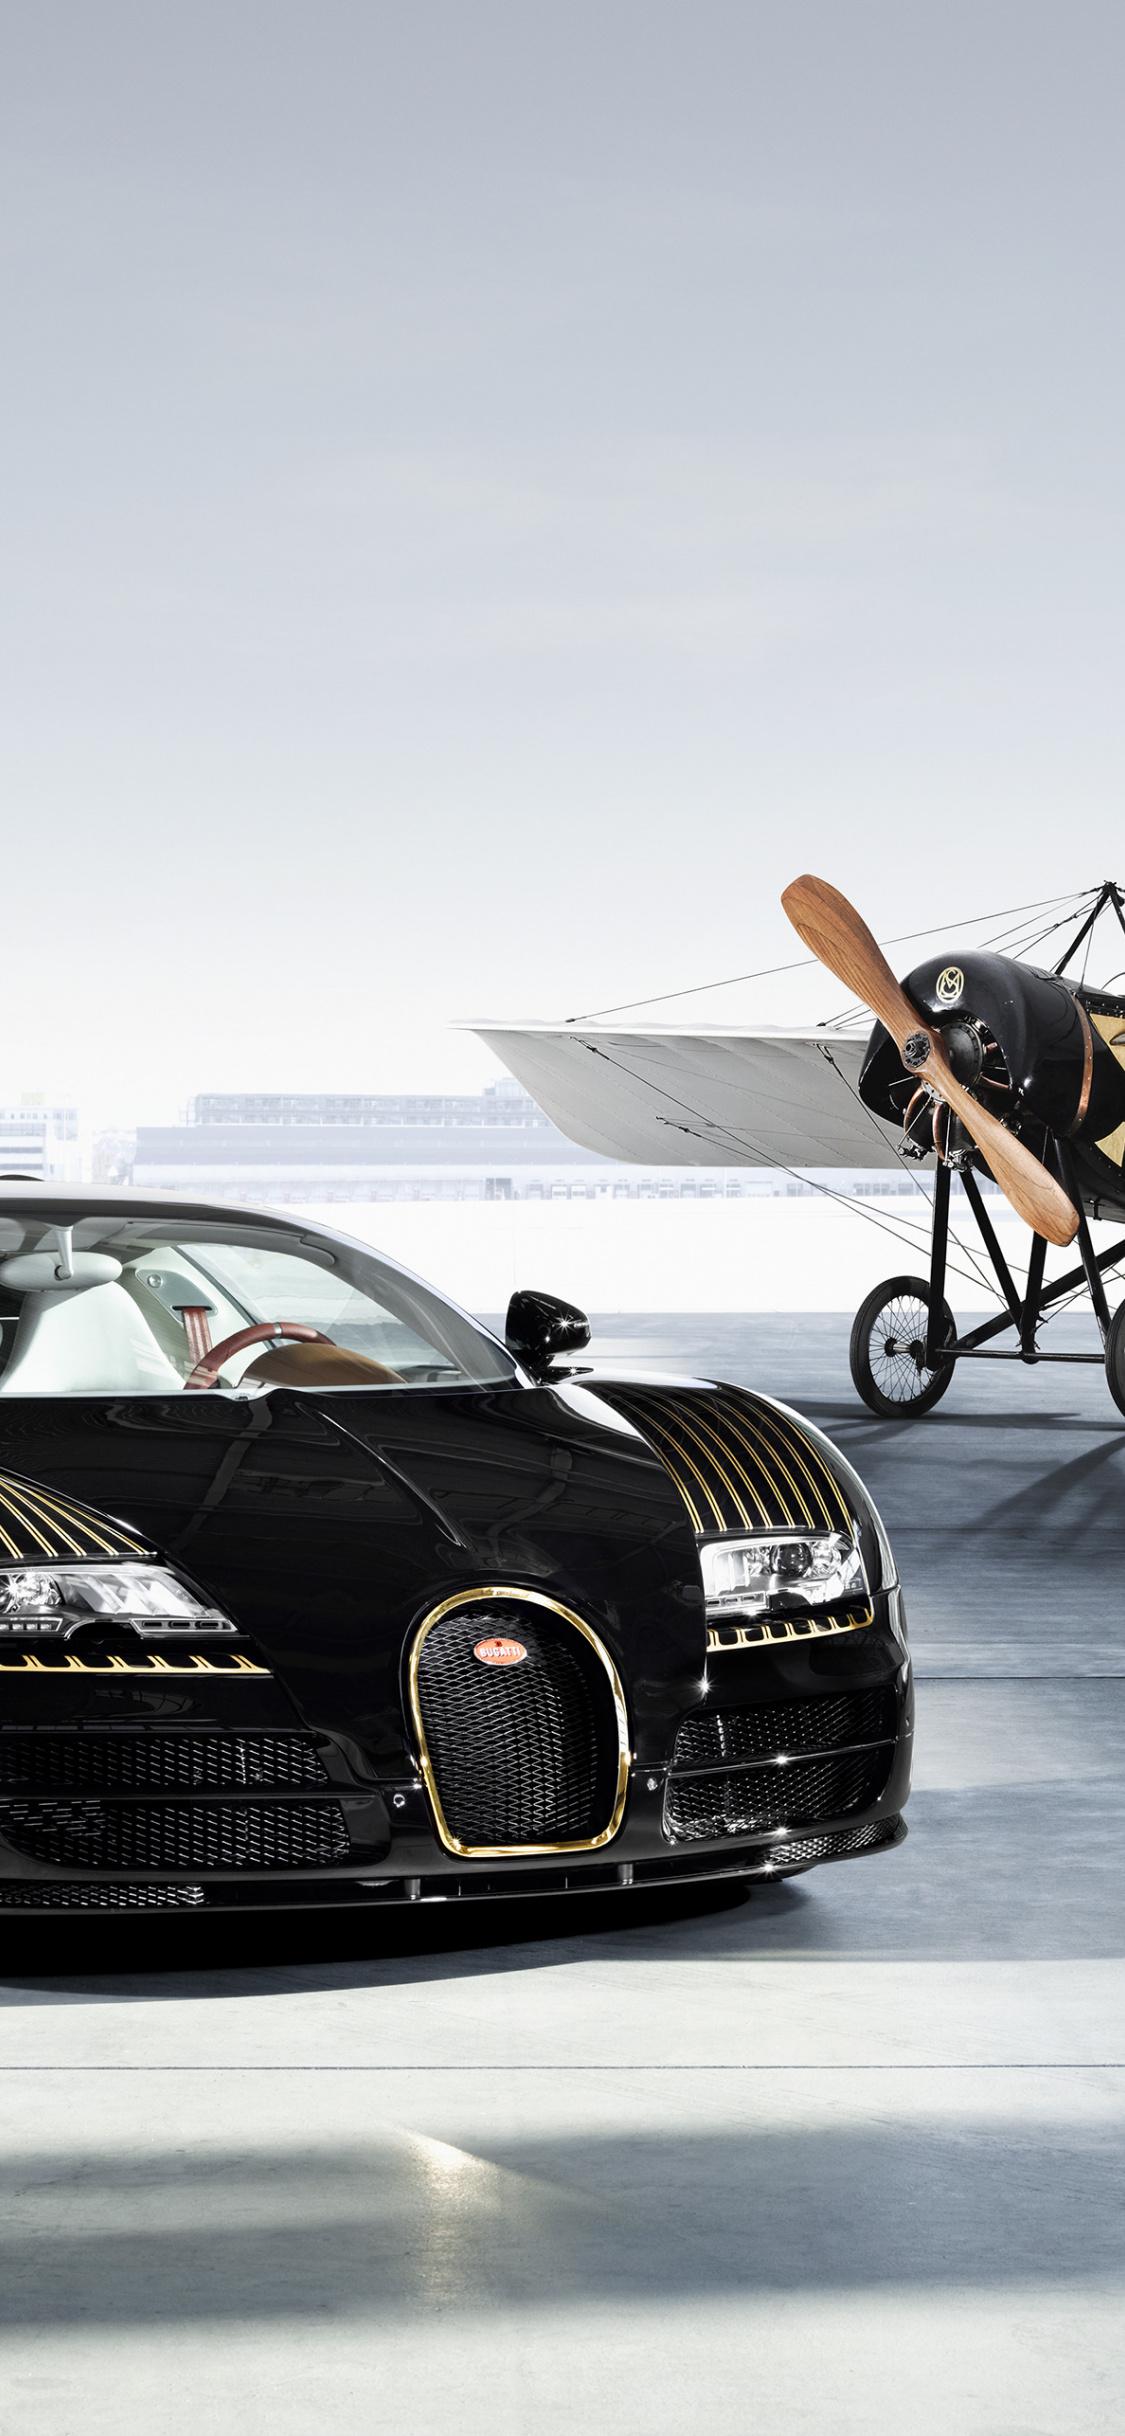 Download 1125x2436 wallpaper bugatti veyron 16.4 grand sport